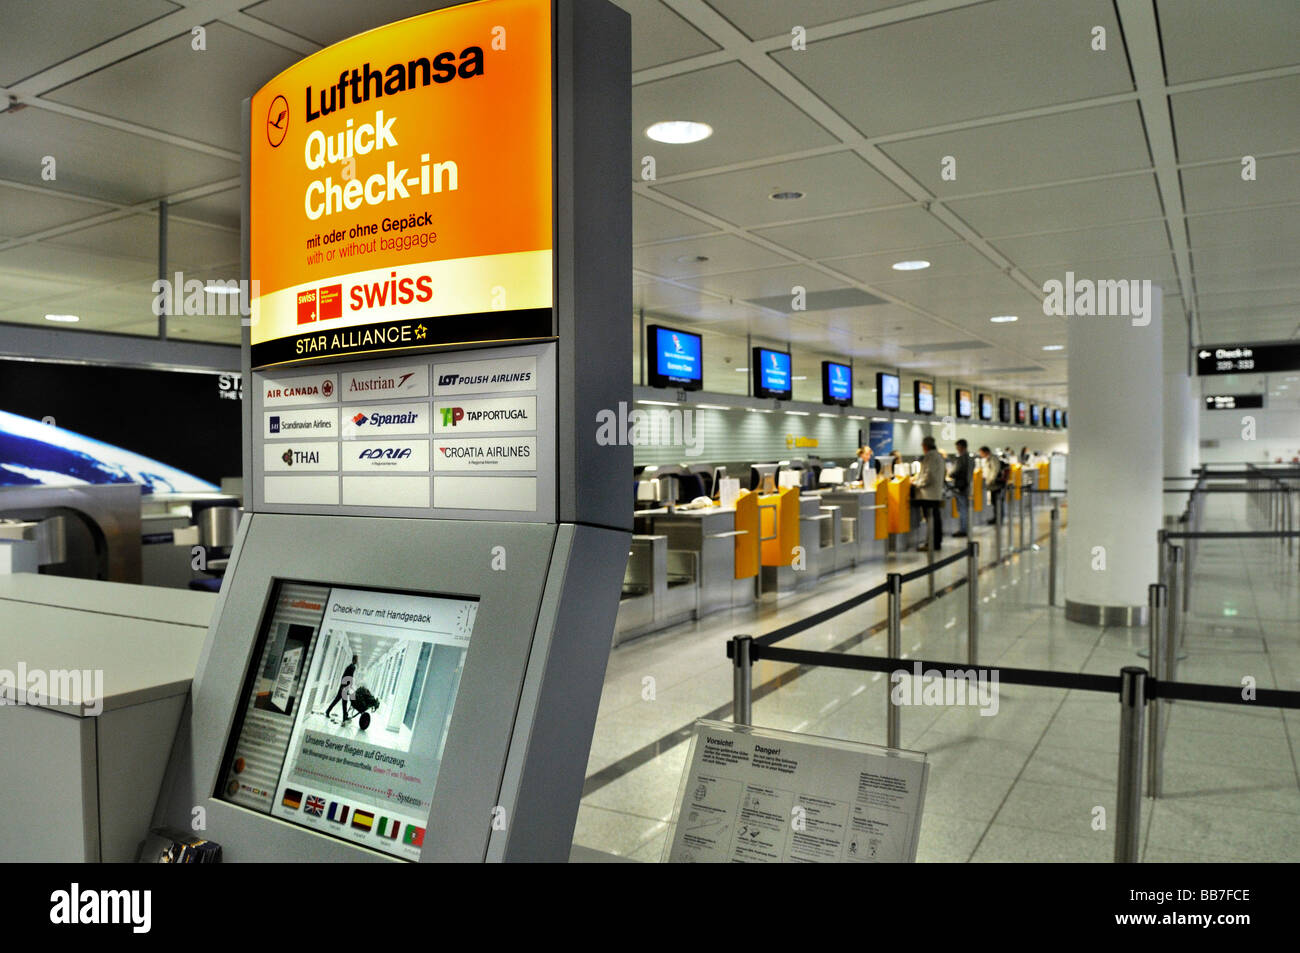 Check-in et check-in rapide, Terminal 2, Aéroport de MUC II, Munich, Bavaria, Germany, Europe Banque D'Images